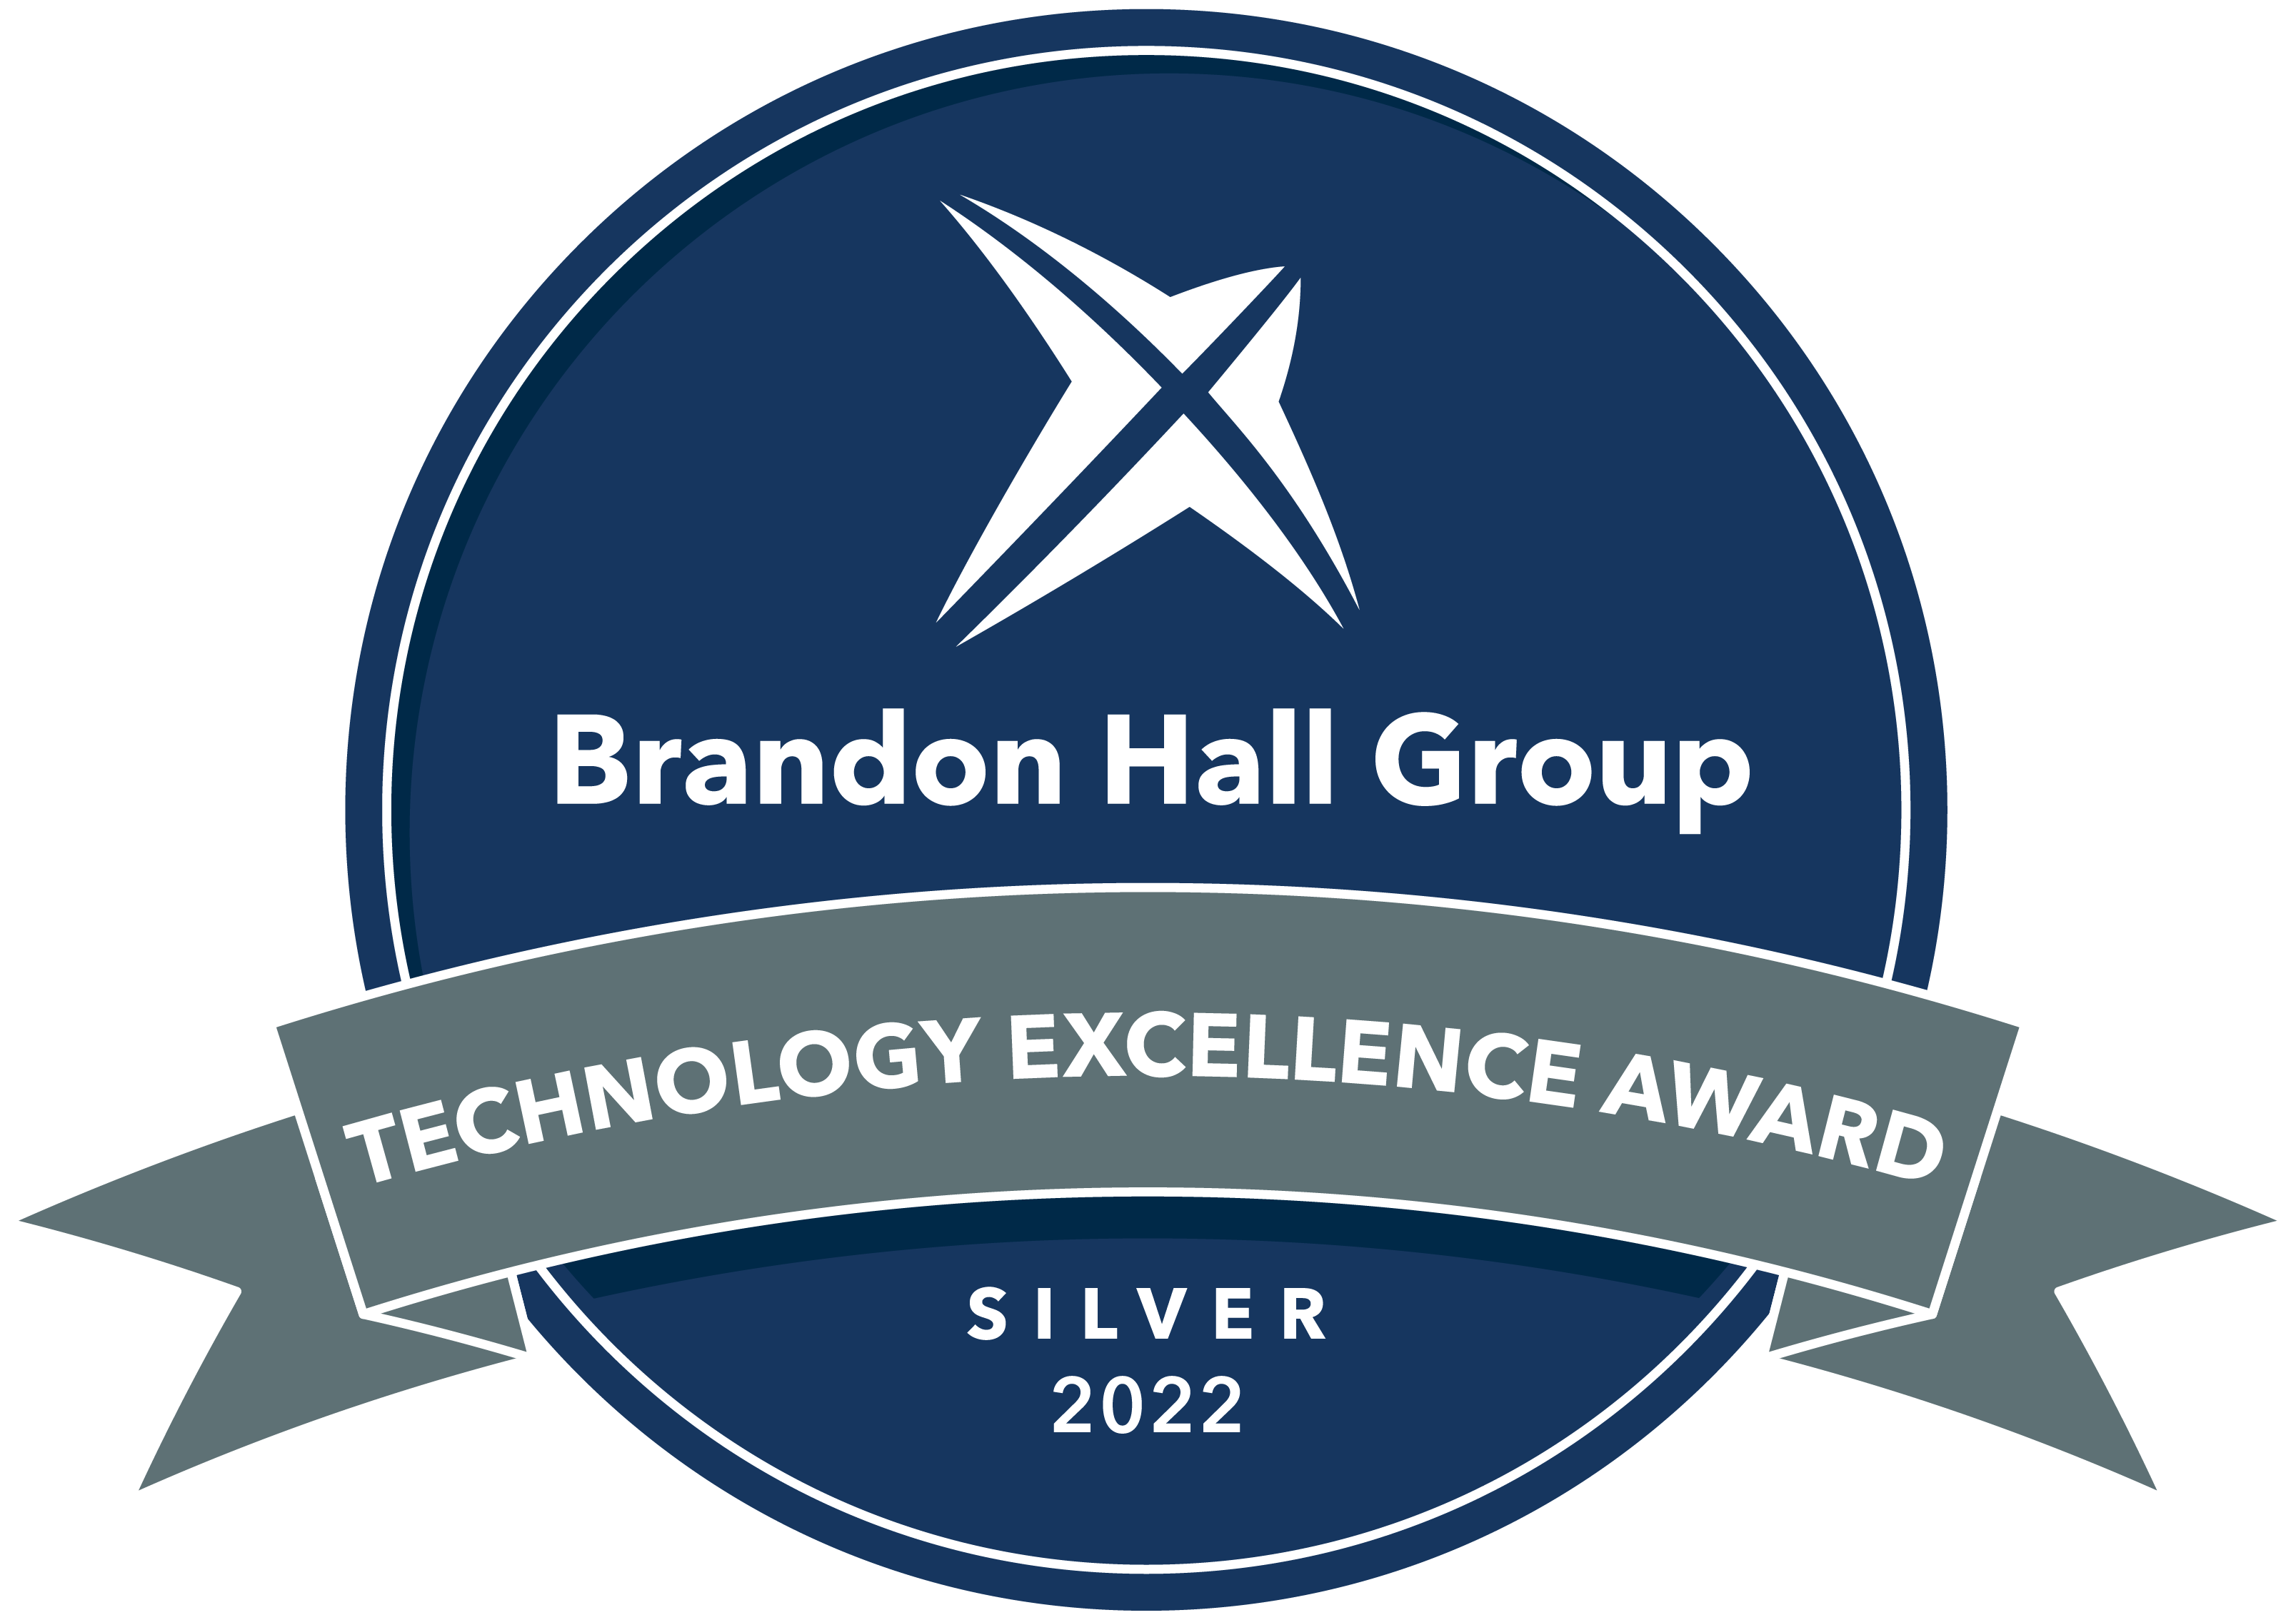 Brandon Hall Group Technology Excellence Award Silver 2022